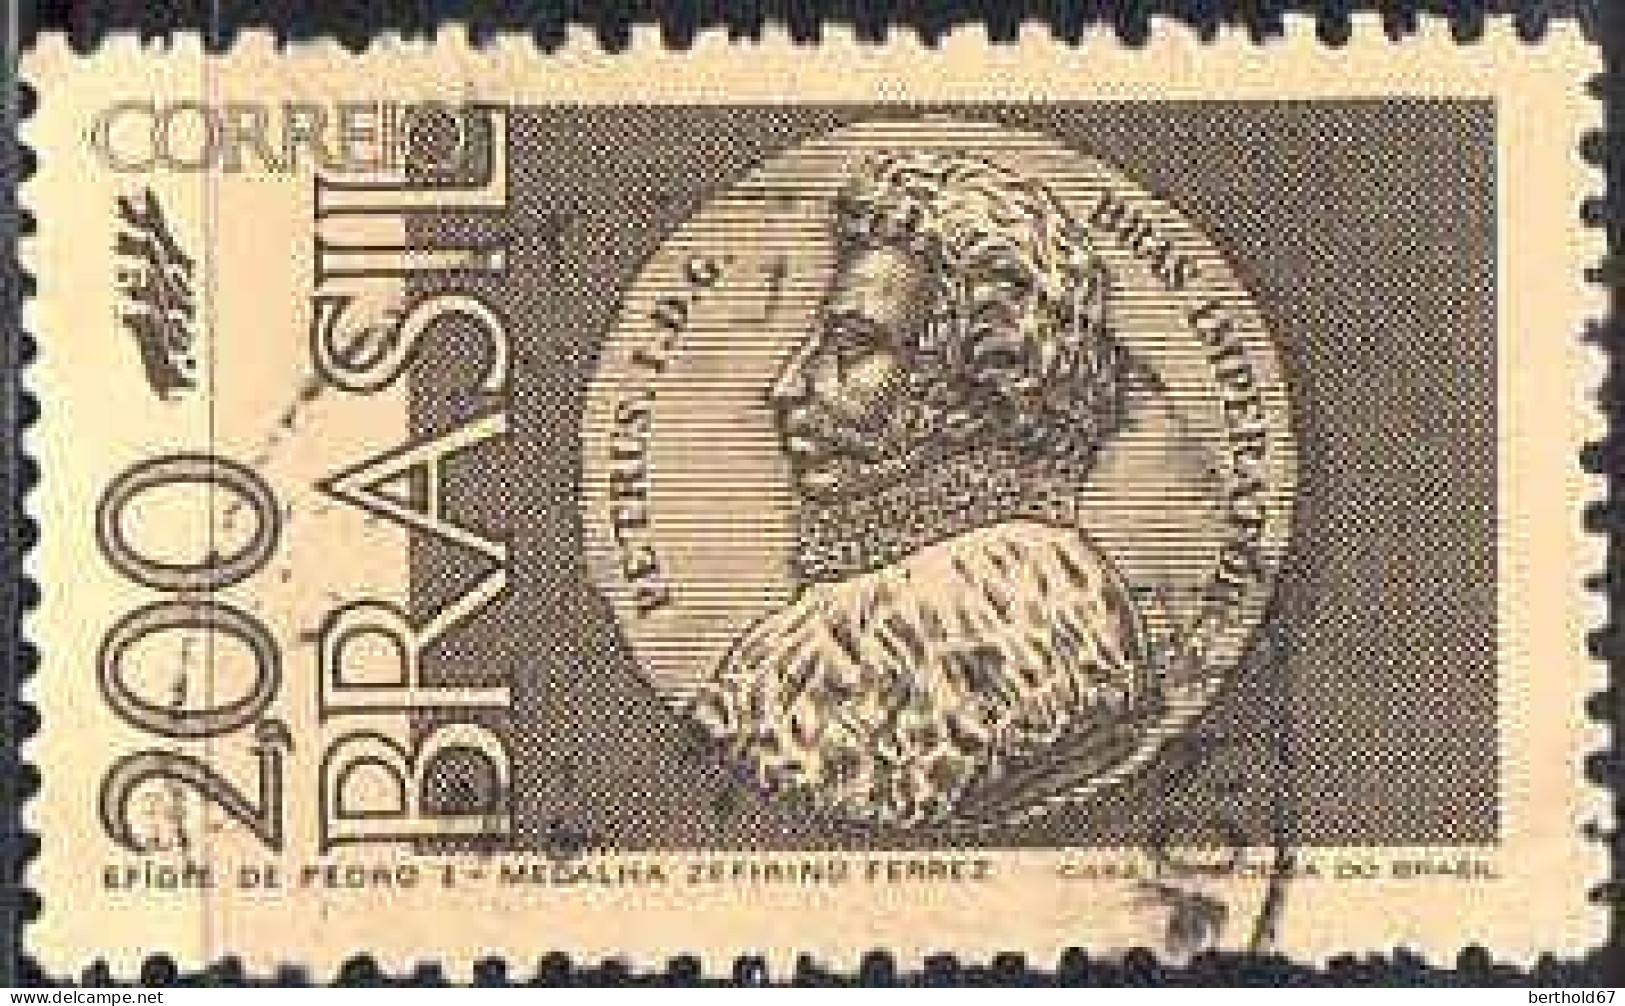 Brésil Poste Obl Yv:1010 Mi:1339 Efigie De Pedro I-Medalha Zefirino Ferrez (Beau Cachet Rond) - Used Stamps